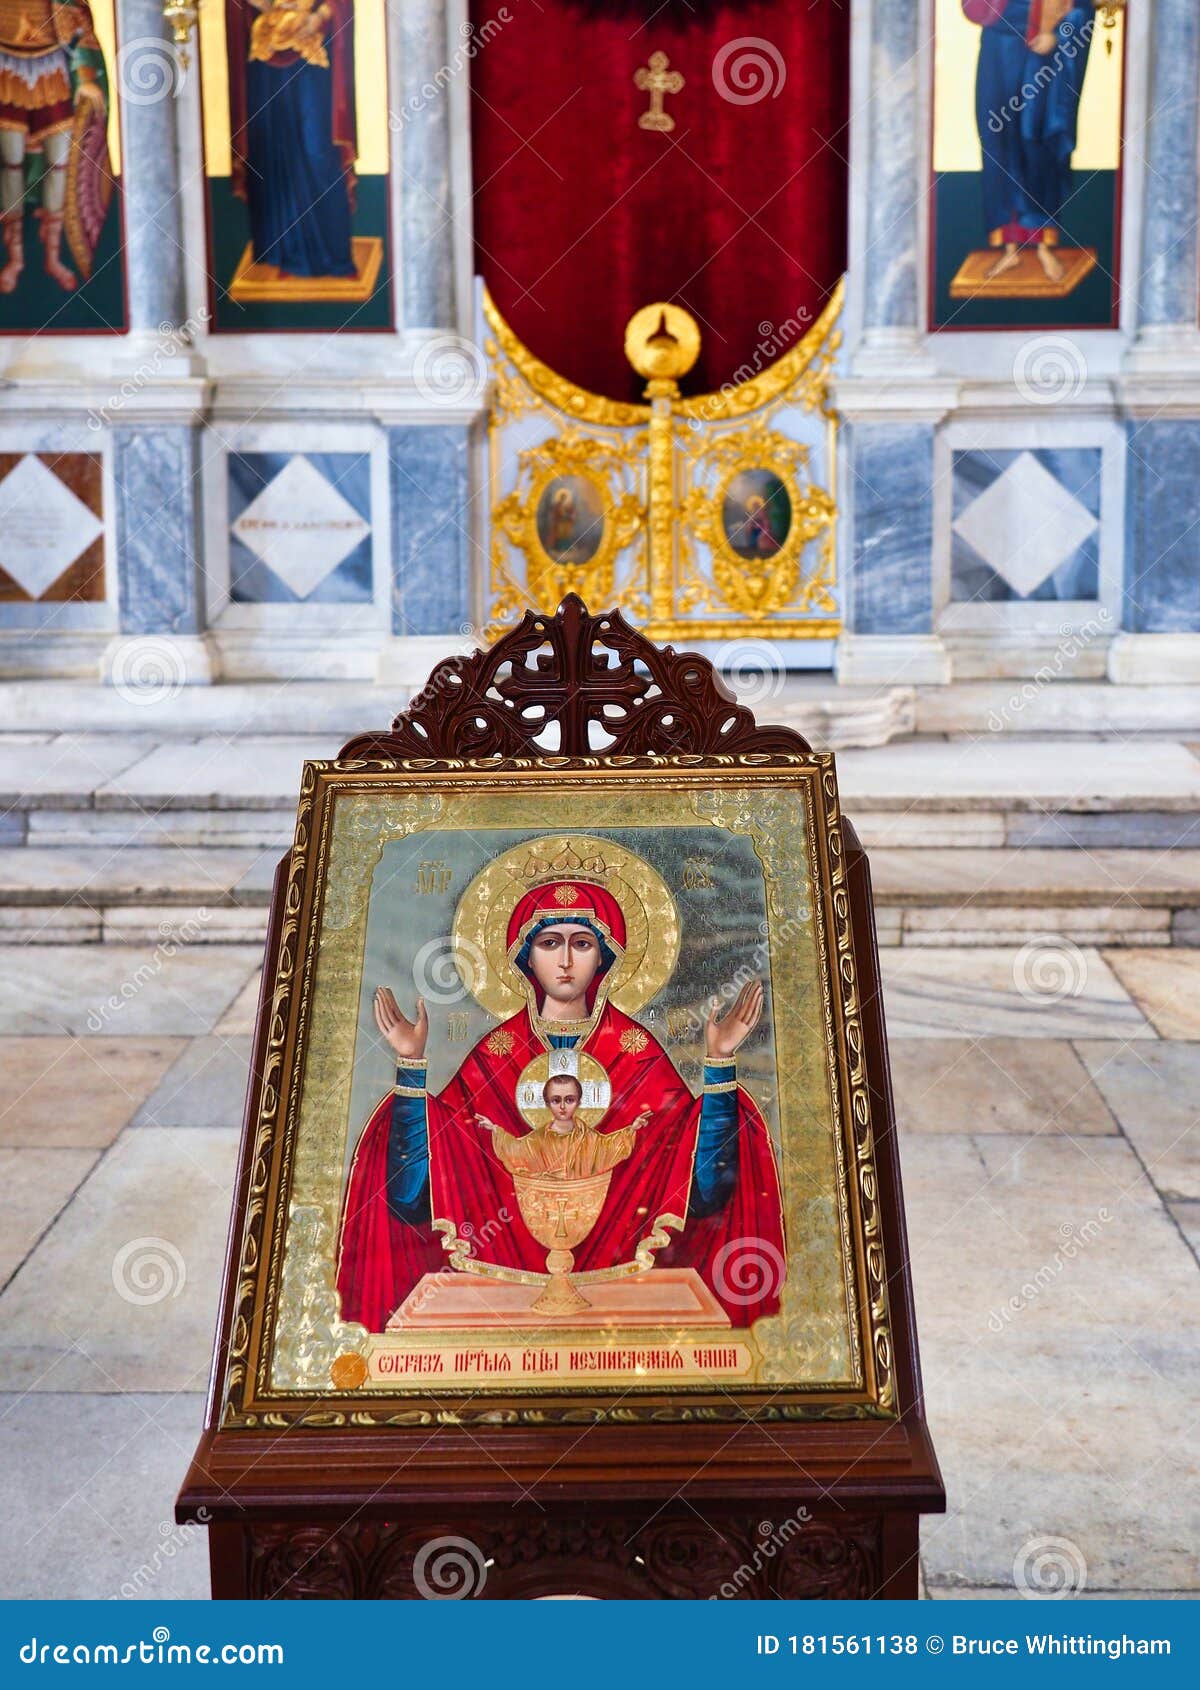 orthodox church icon, plovdiv old town, bulgaria